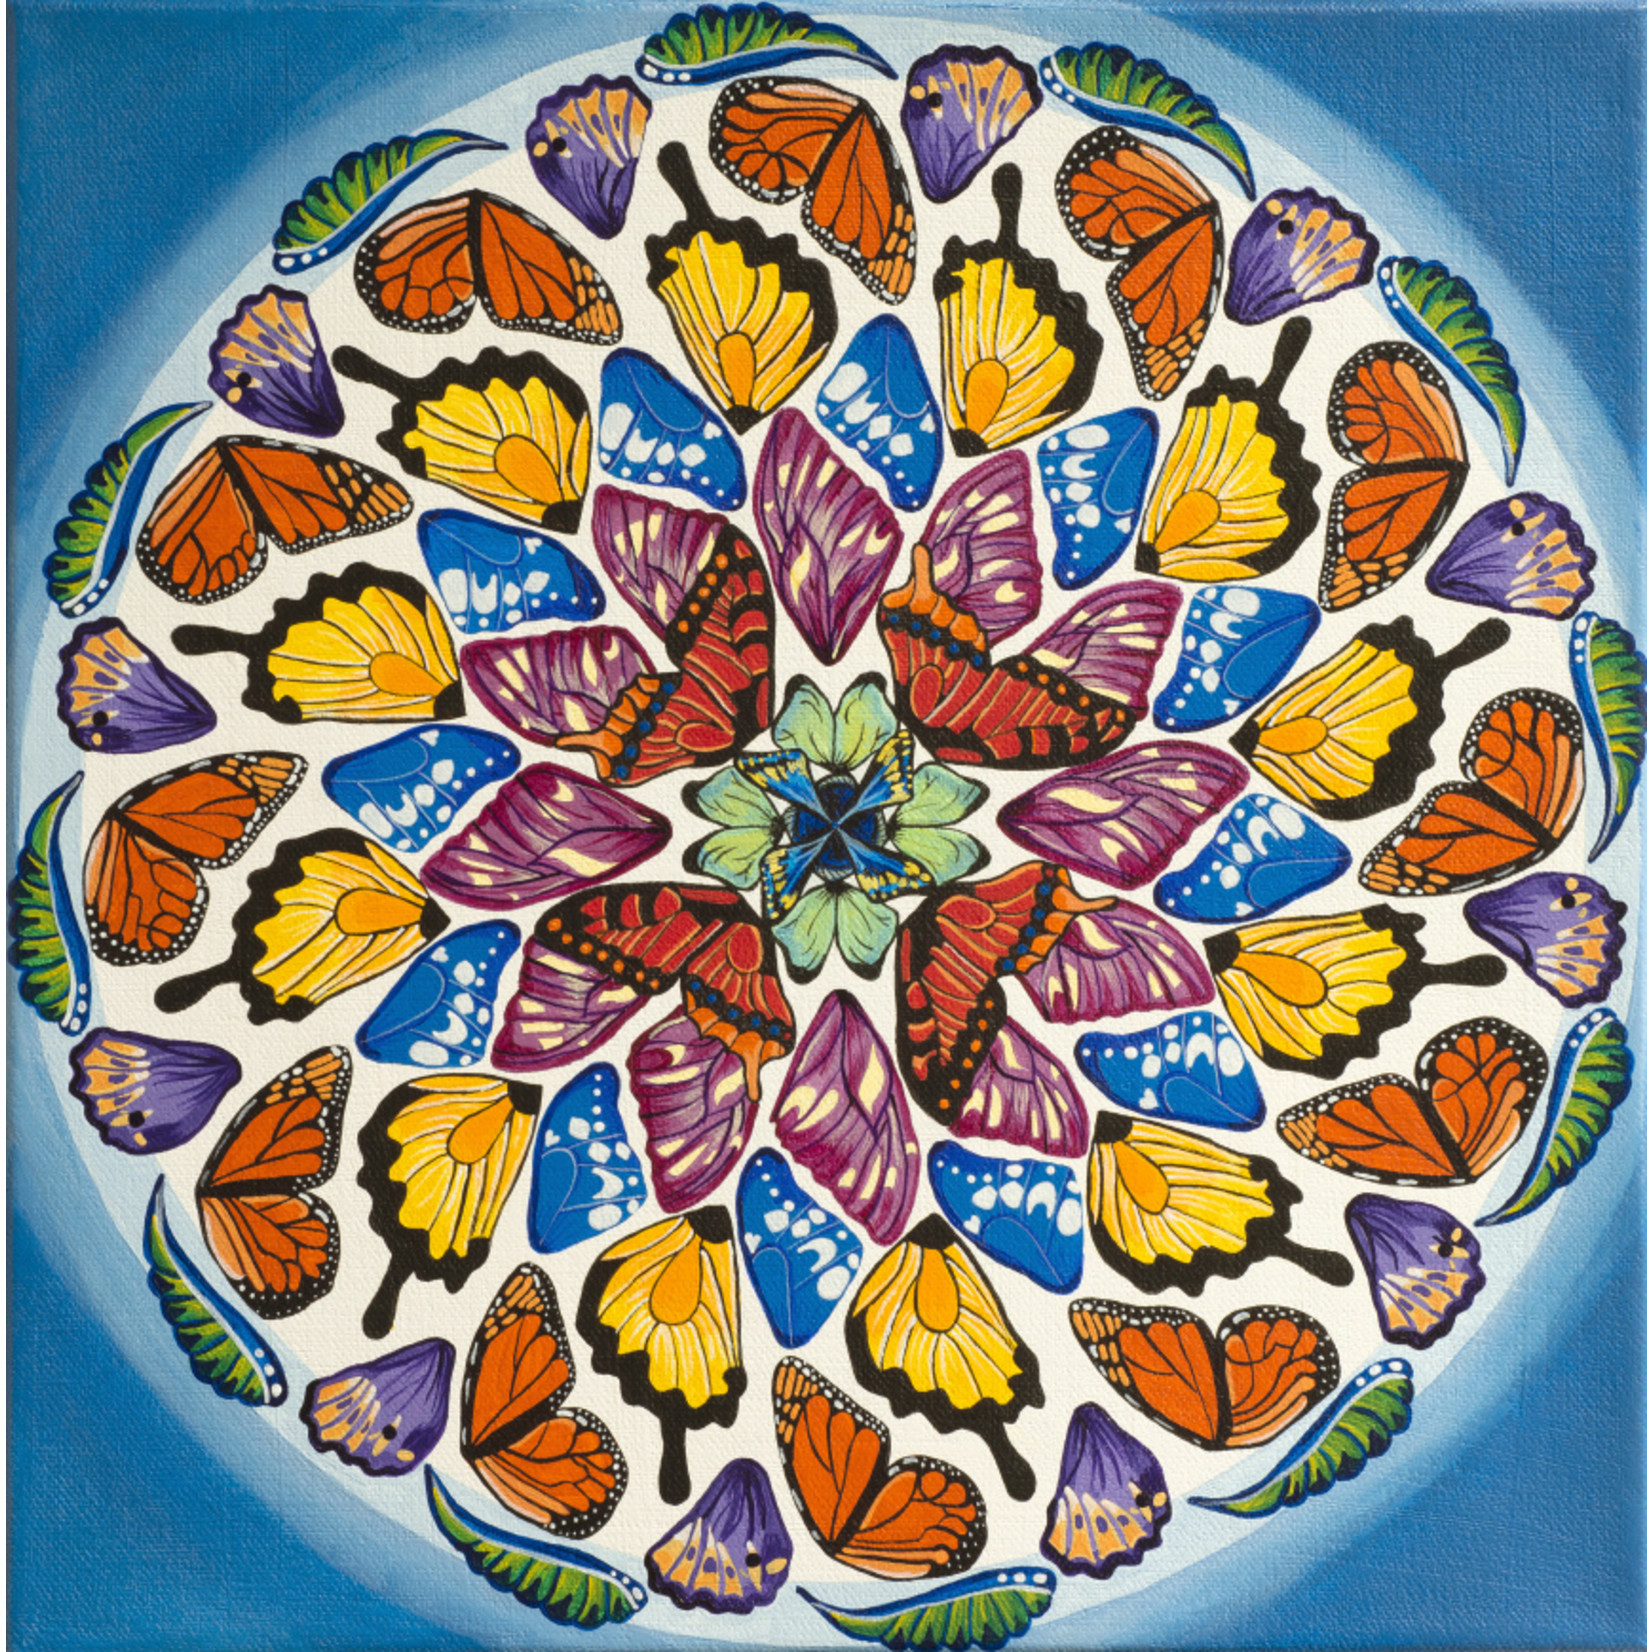 Stirling Studios "Butterflies" Mandala Canvas Print